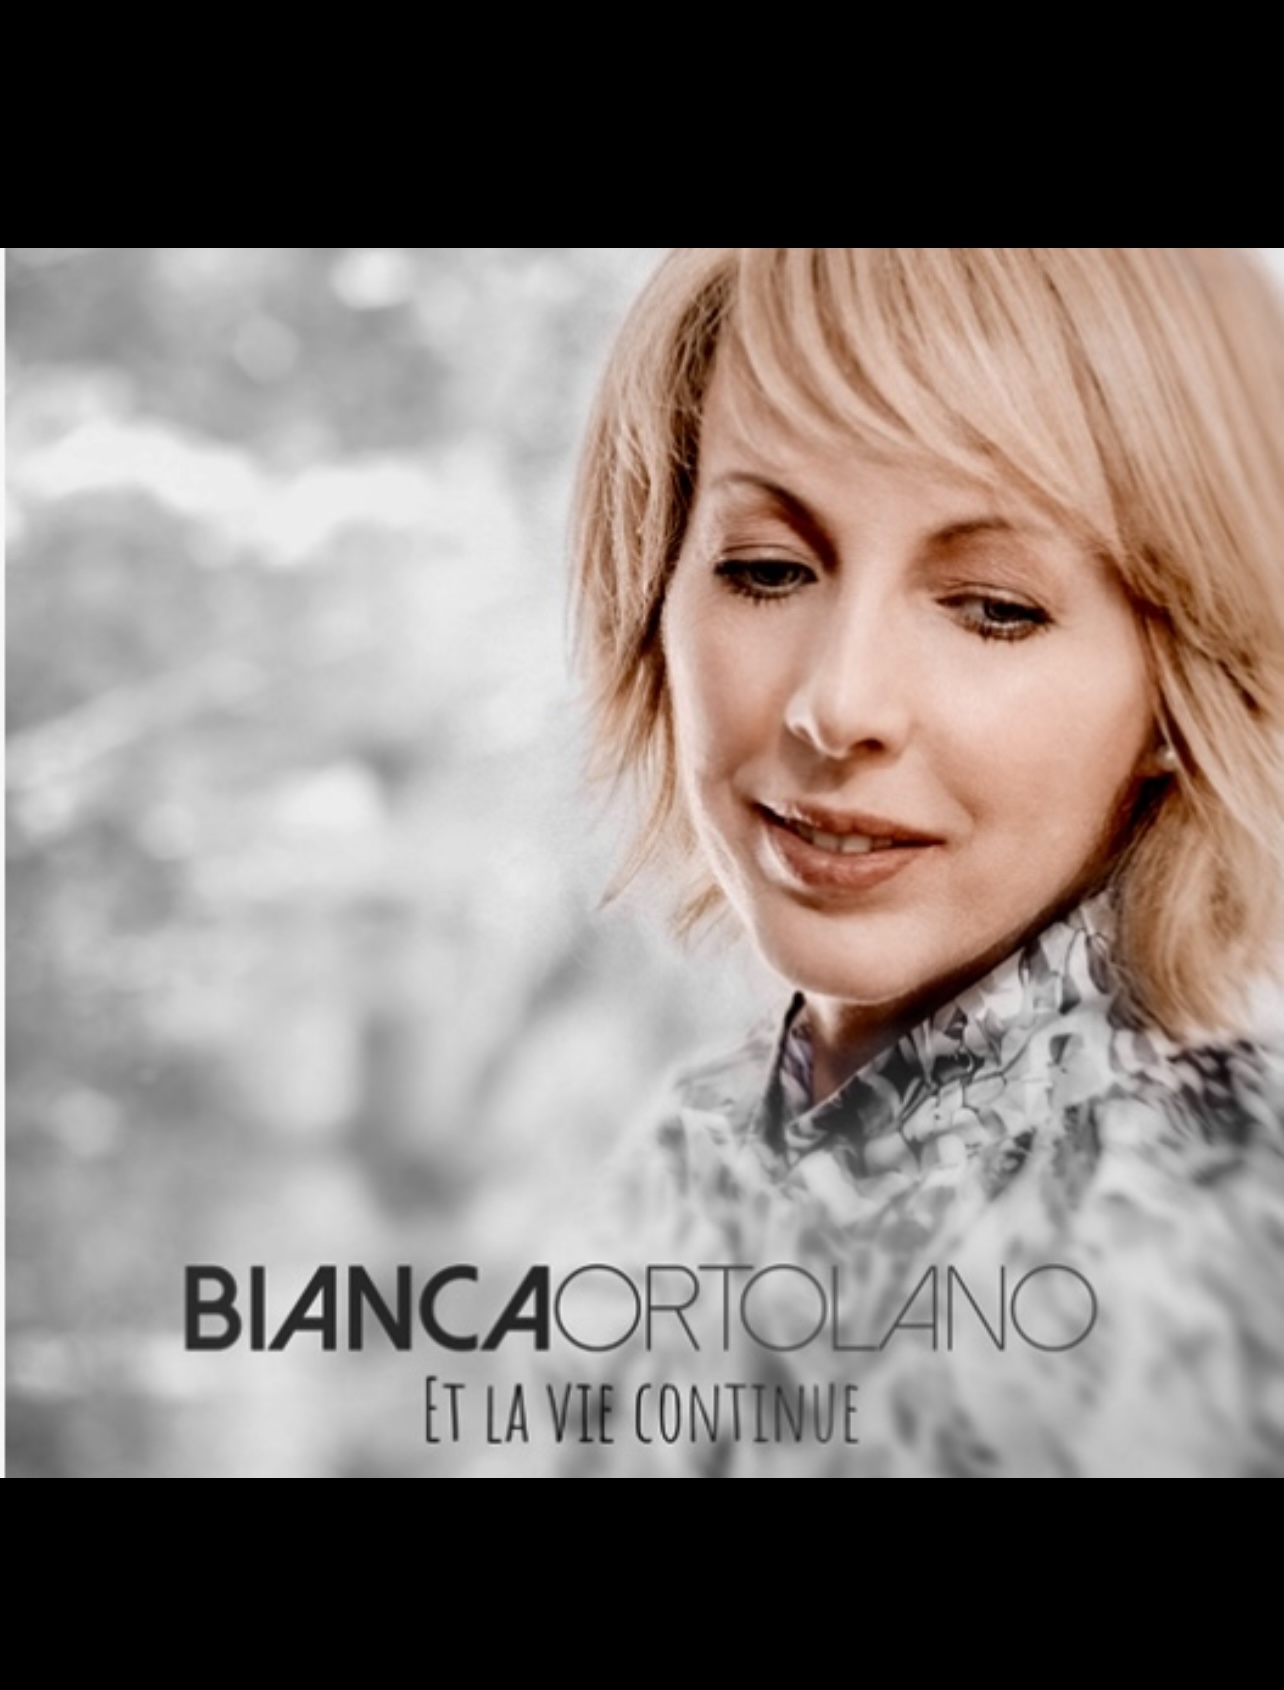 Bianca Ortolano, voix intemporelle, continue sa musique enchanteresse.